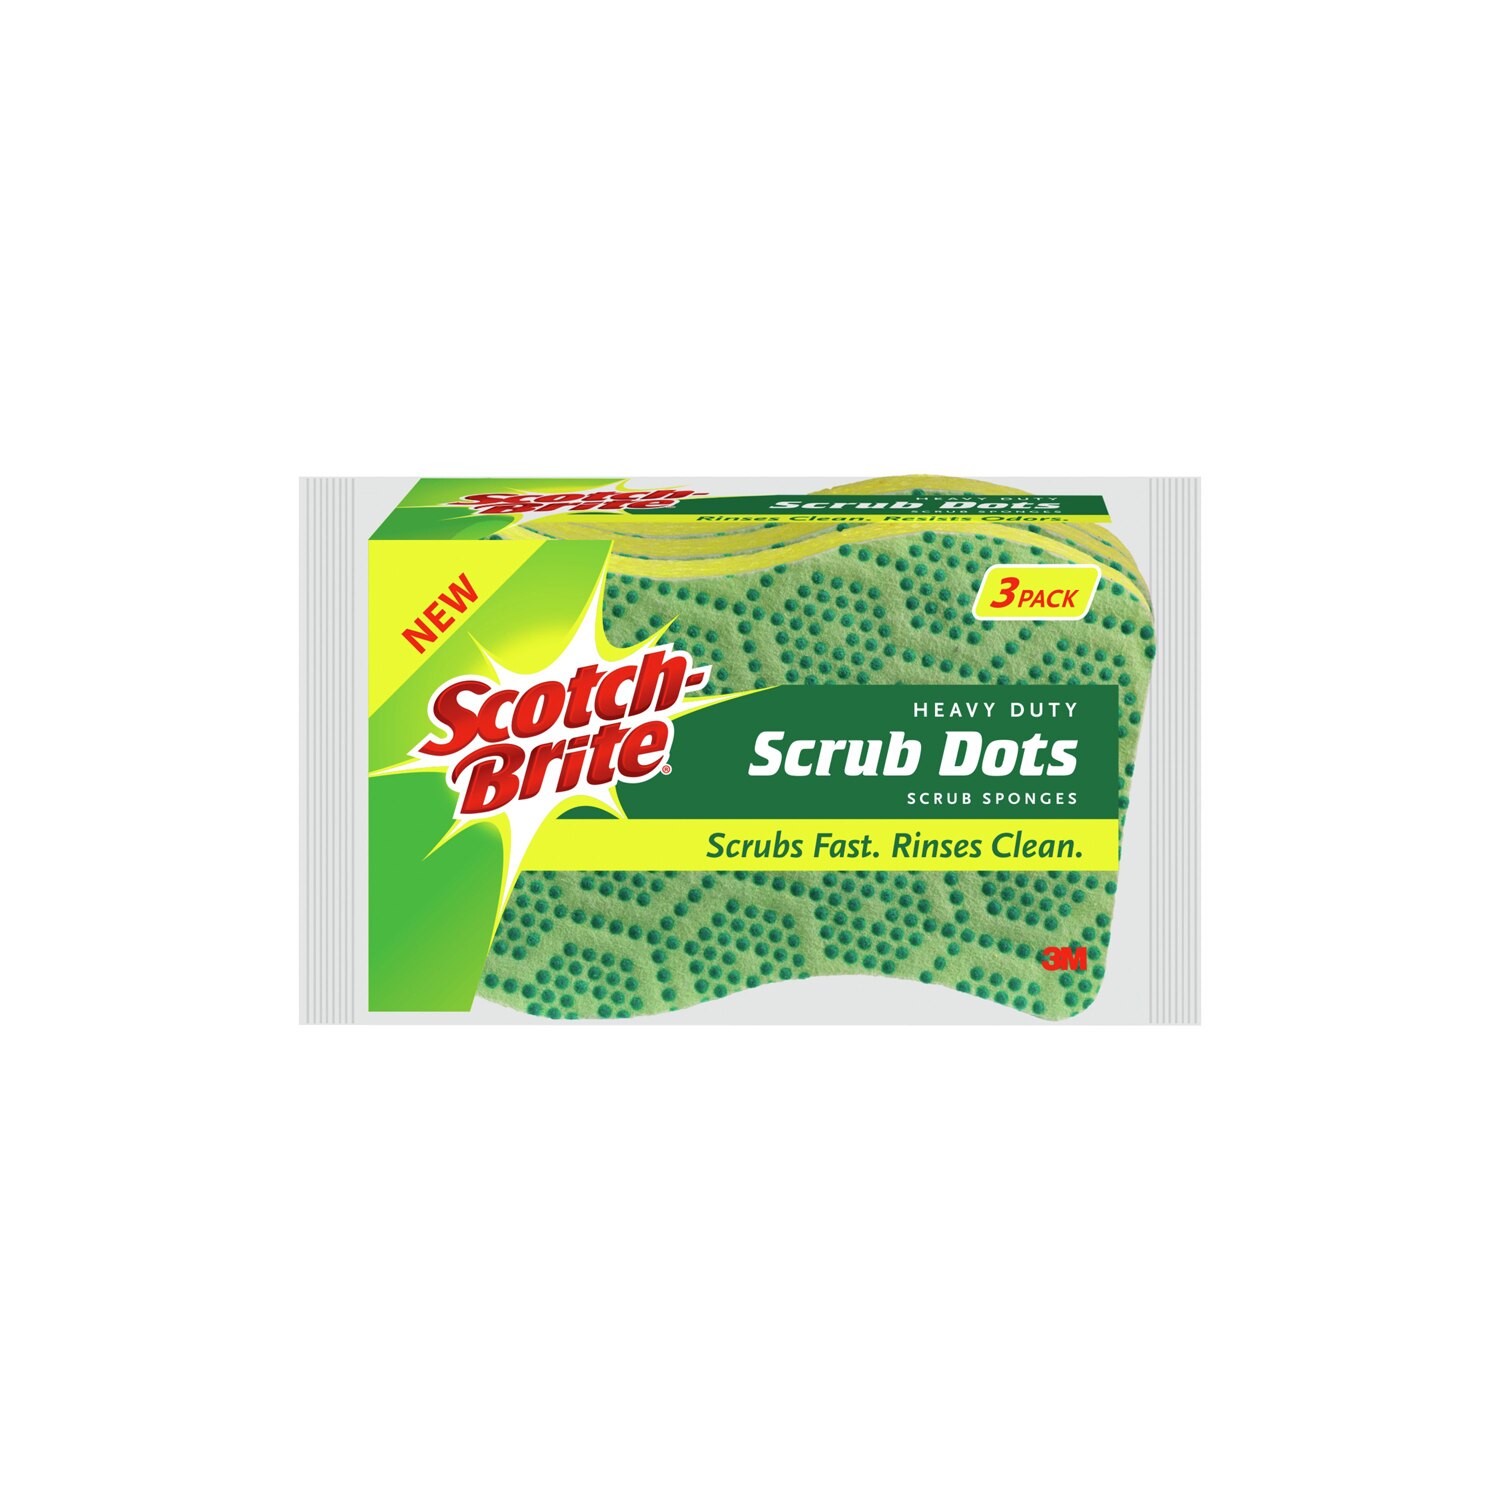 Scotch-Brite Scrub Dots Heavy Duty Scrub Sponge, 3 CT